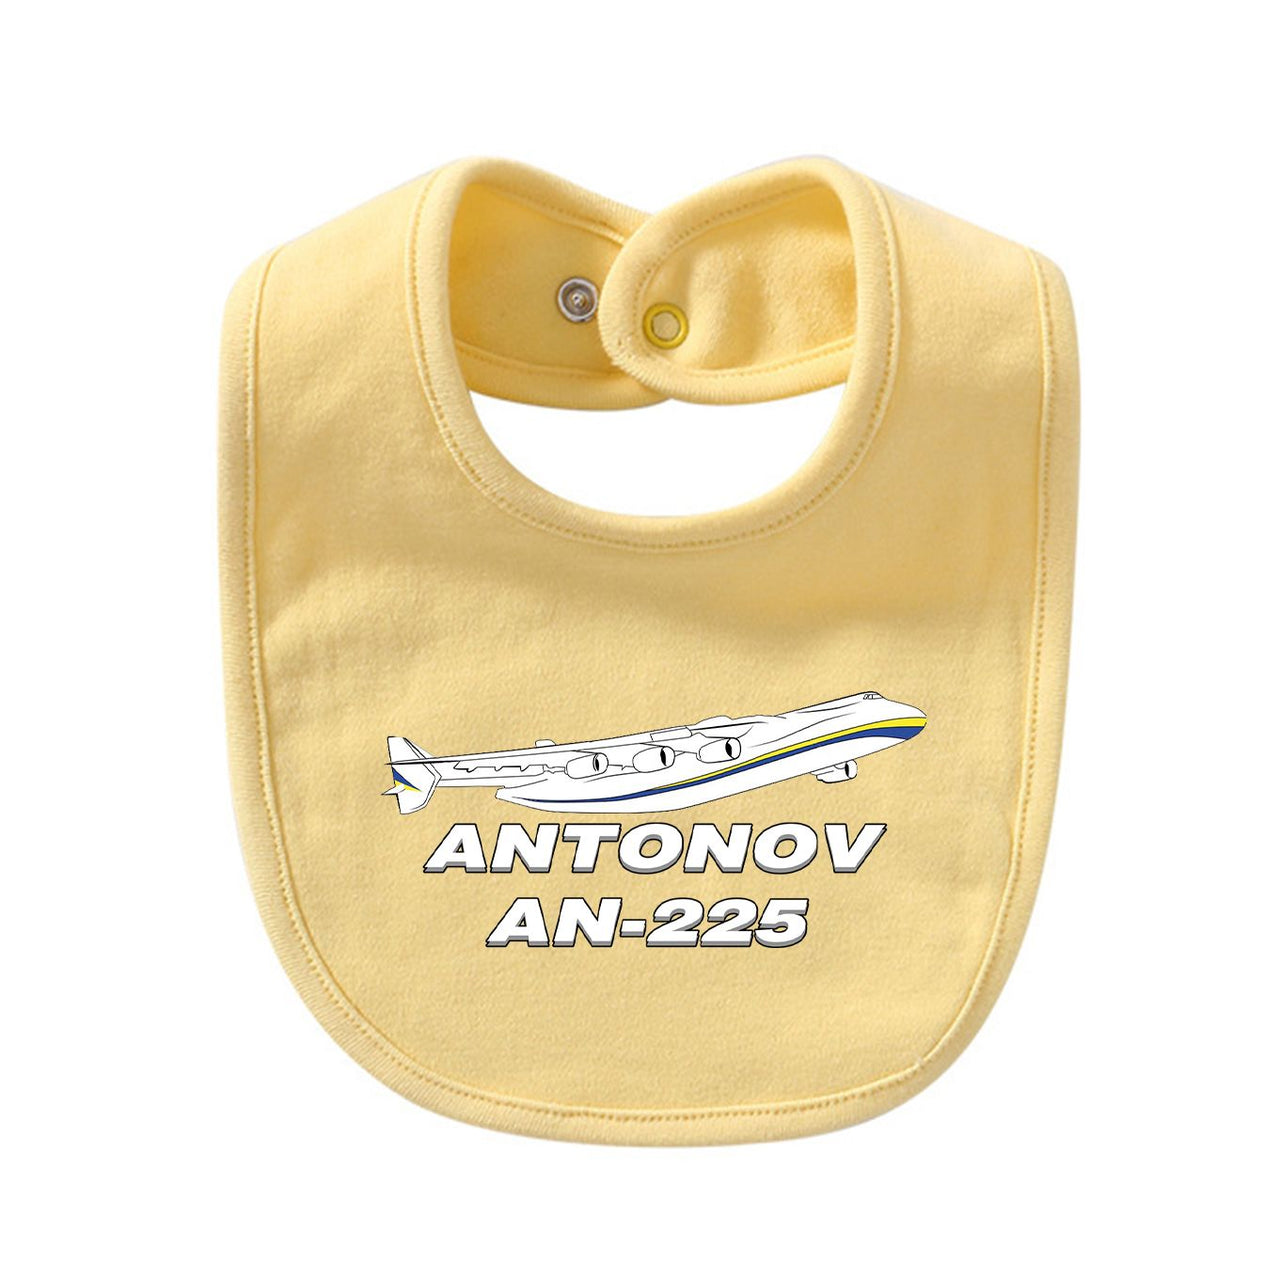 Antonov AN-225 (27) Designed Baby Saliva & Feeding Towels